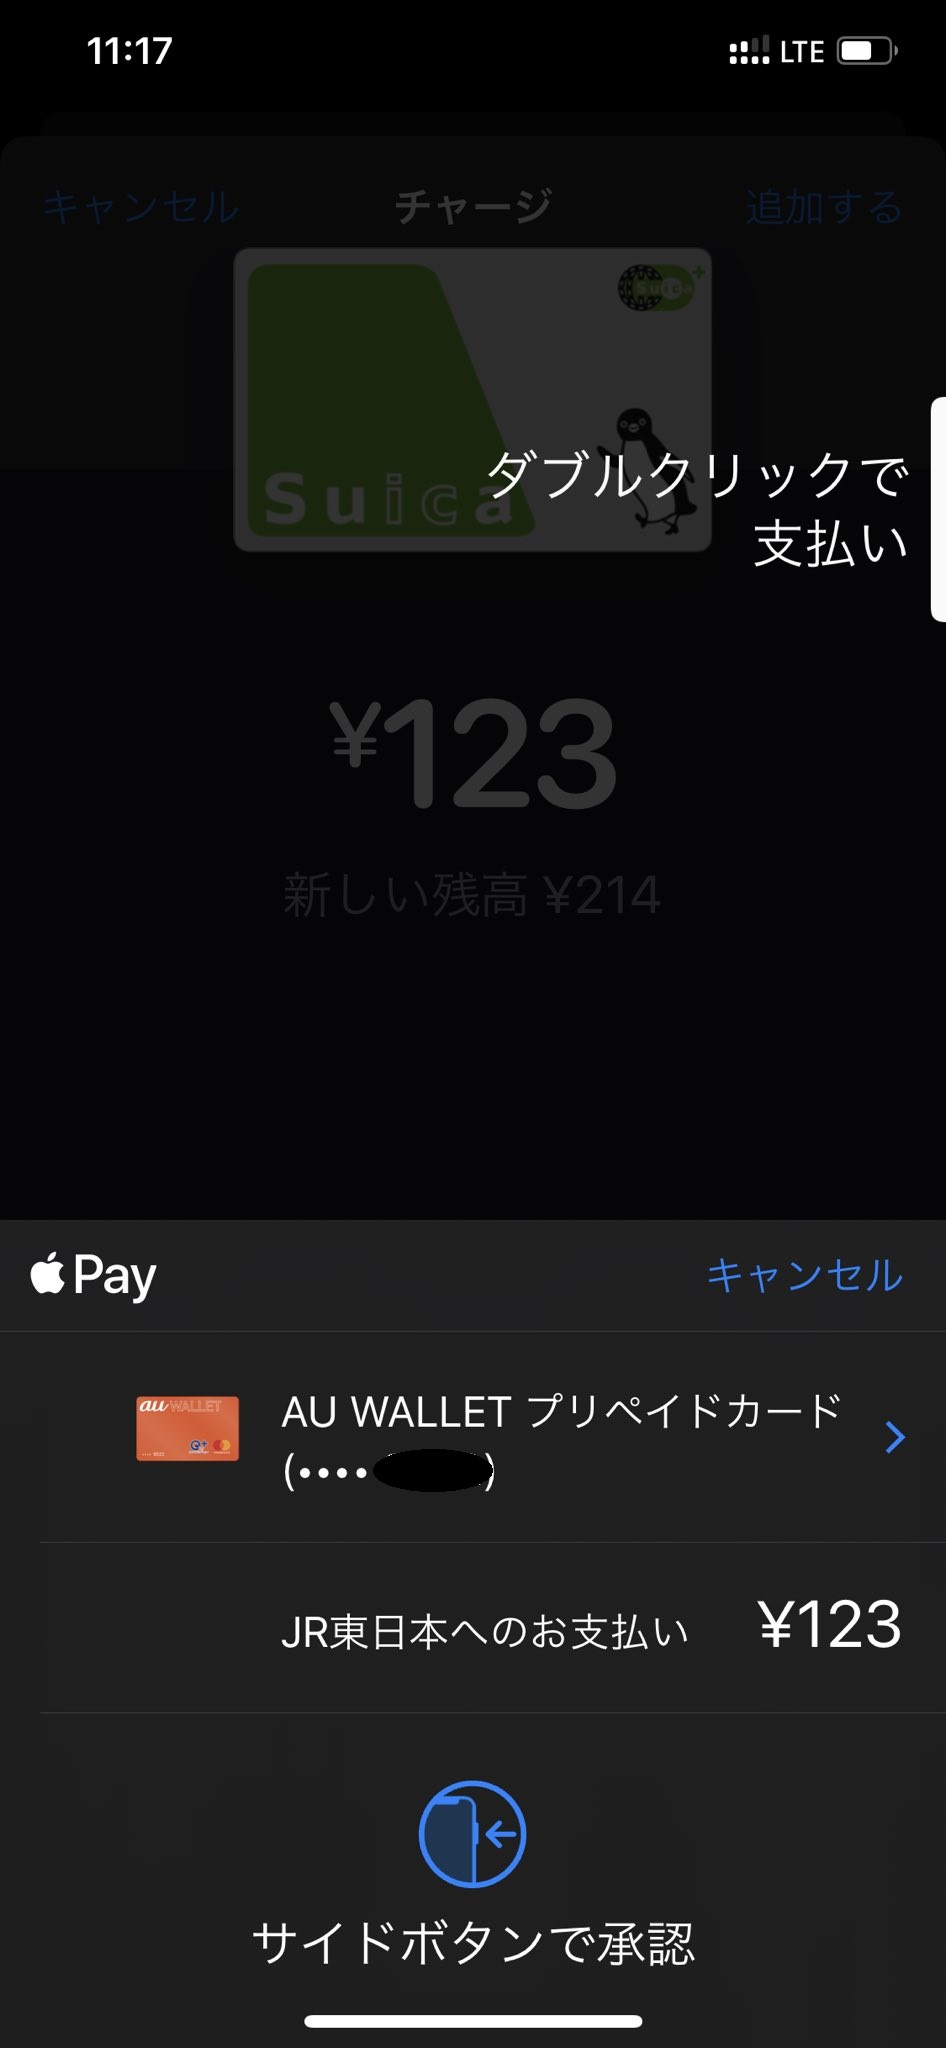 Visa 非対応の Apple Pay 第 4 話 エポスカードを Master 化させる方法 Skyblue